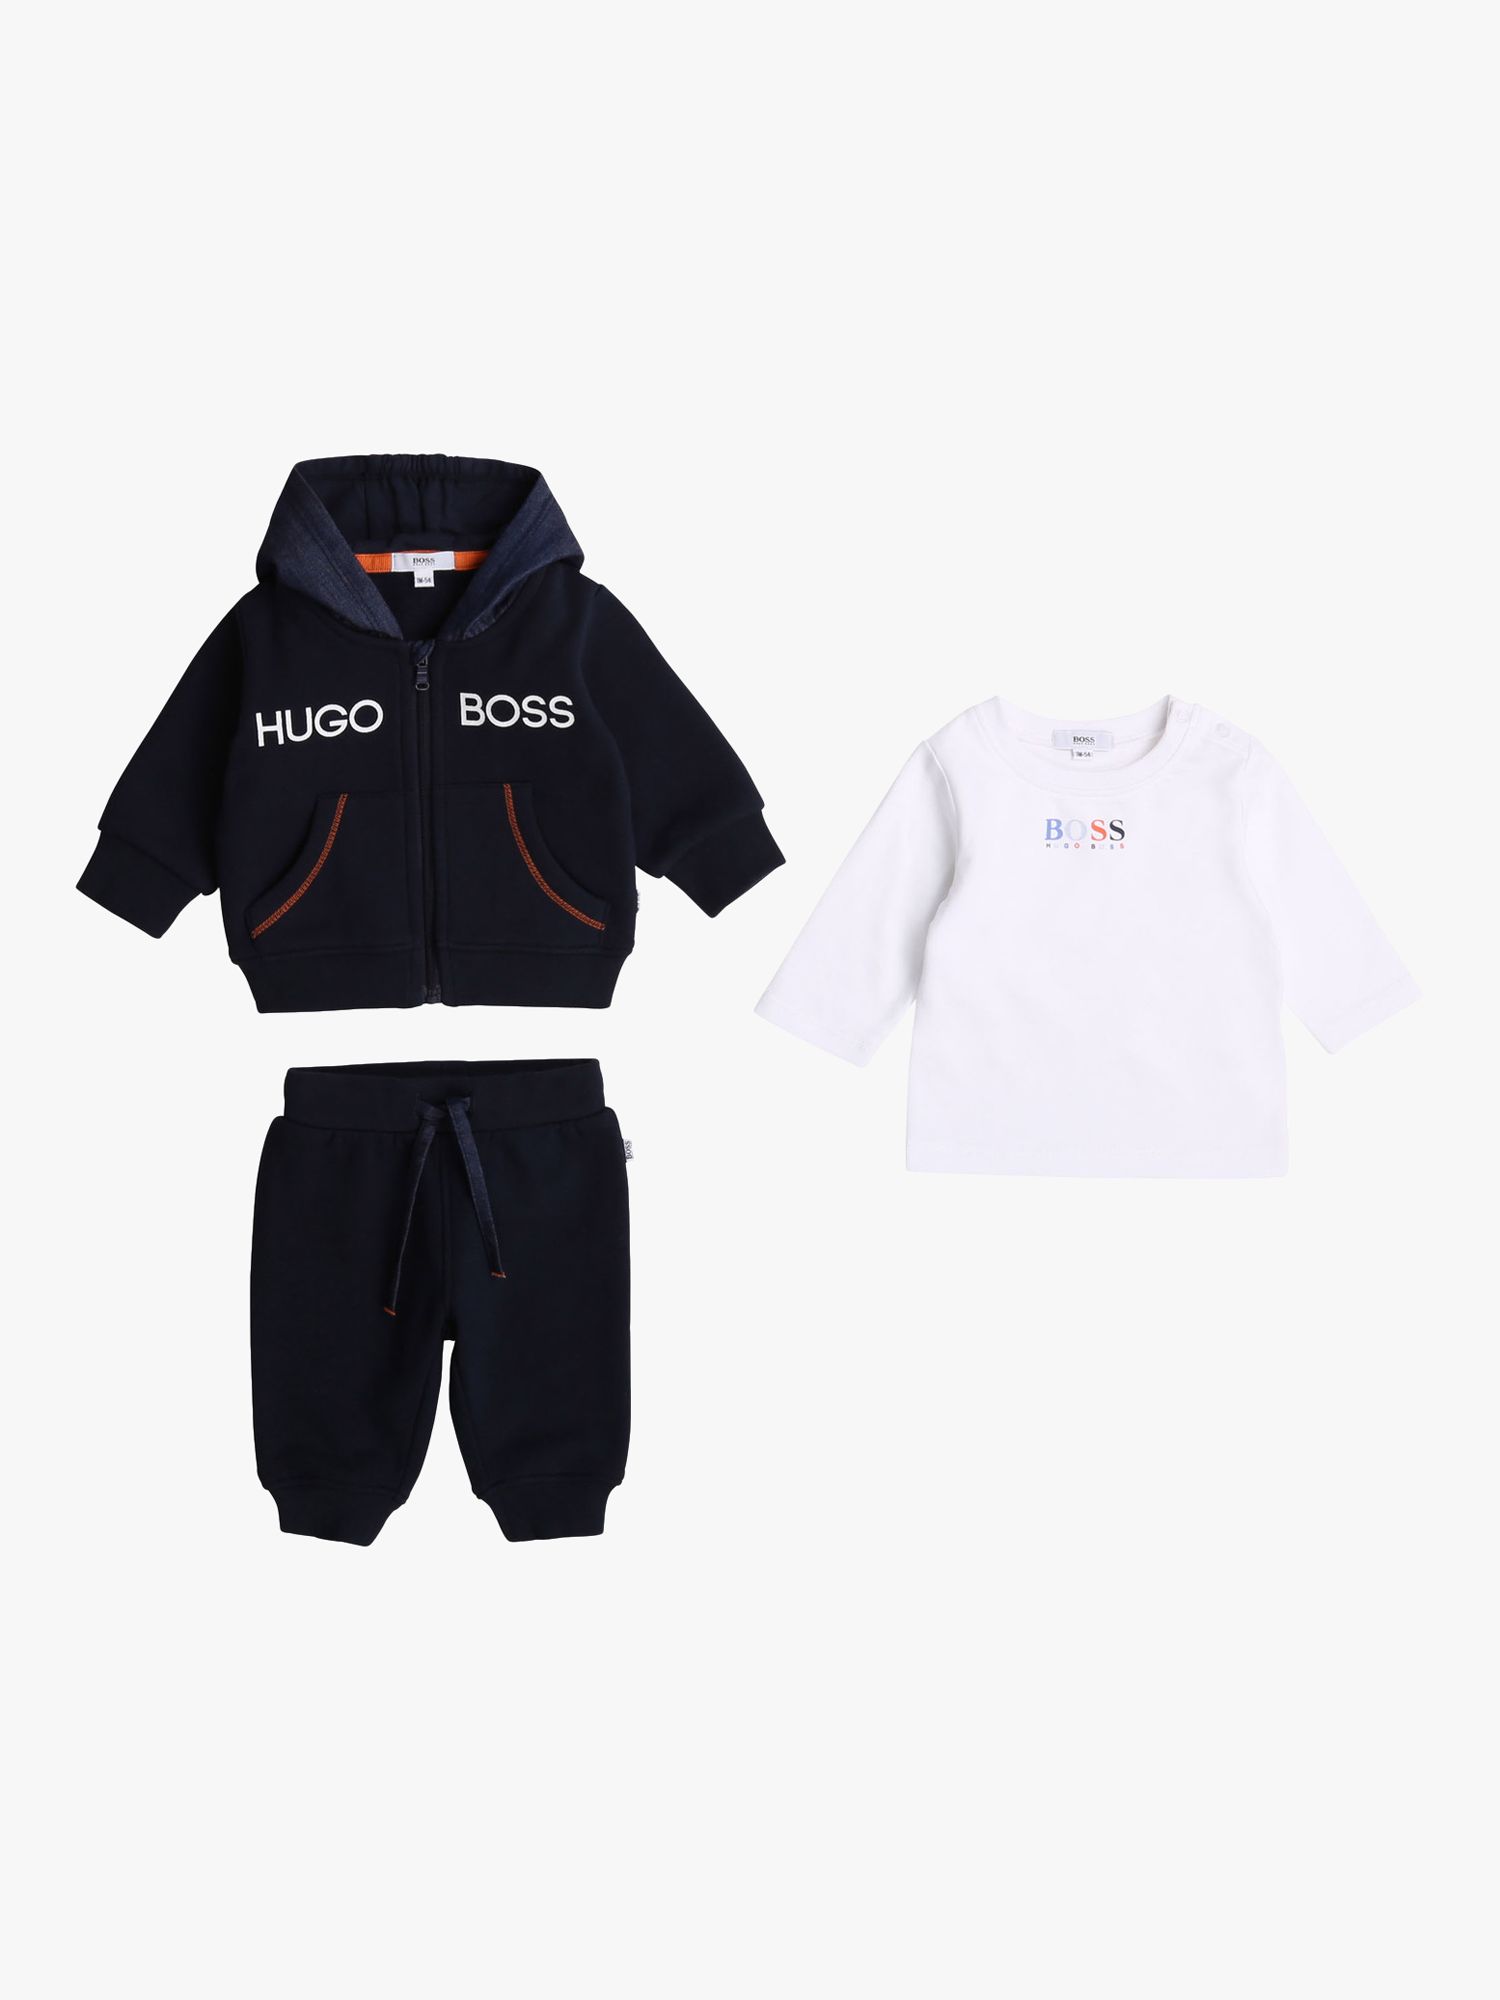 hugo boss tracksuit for babies